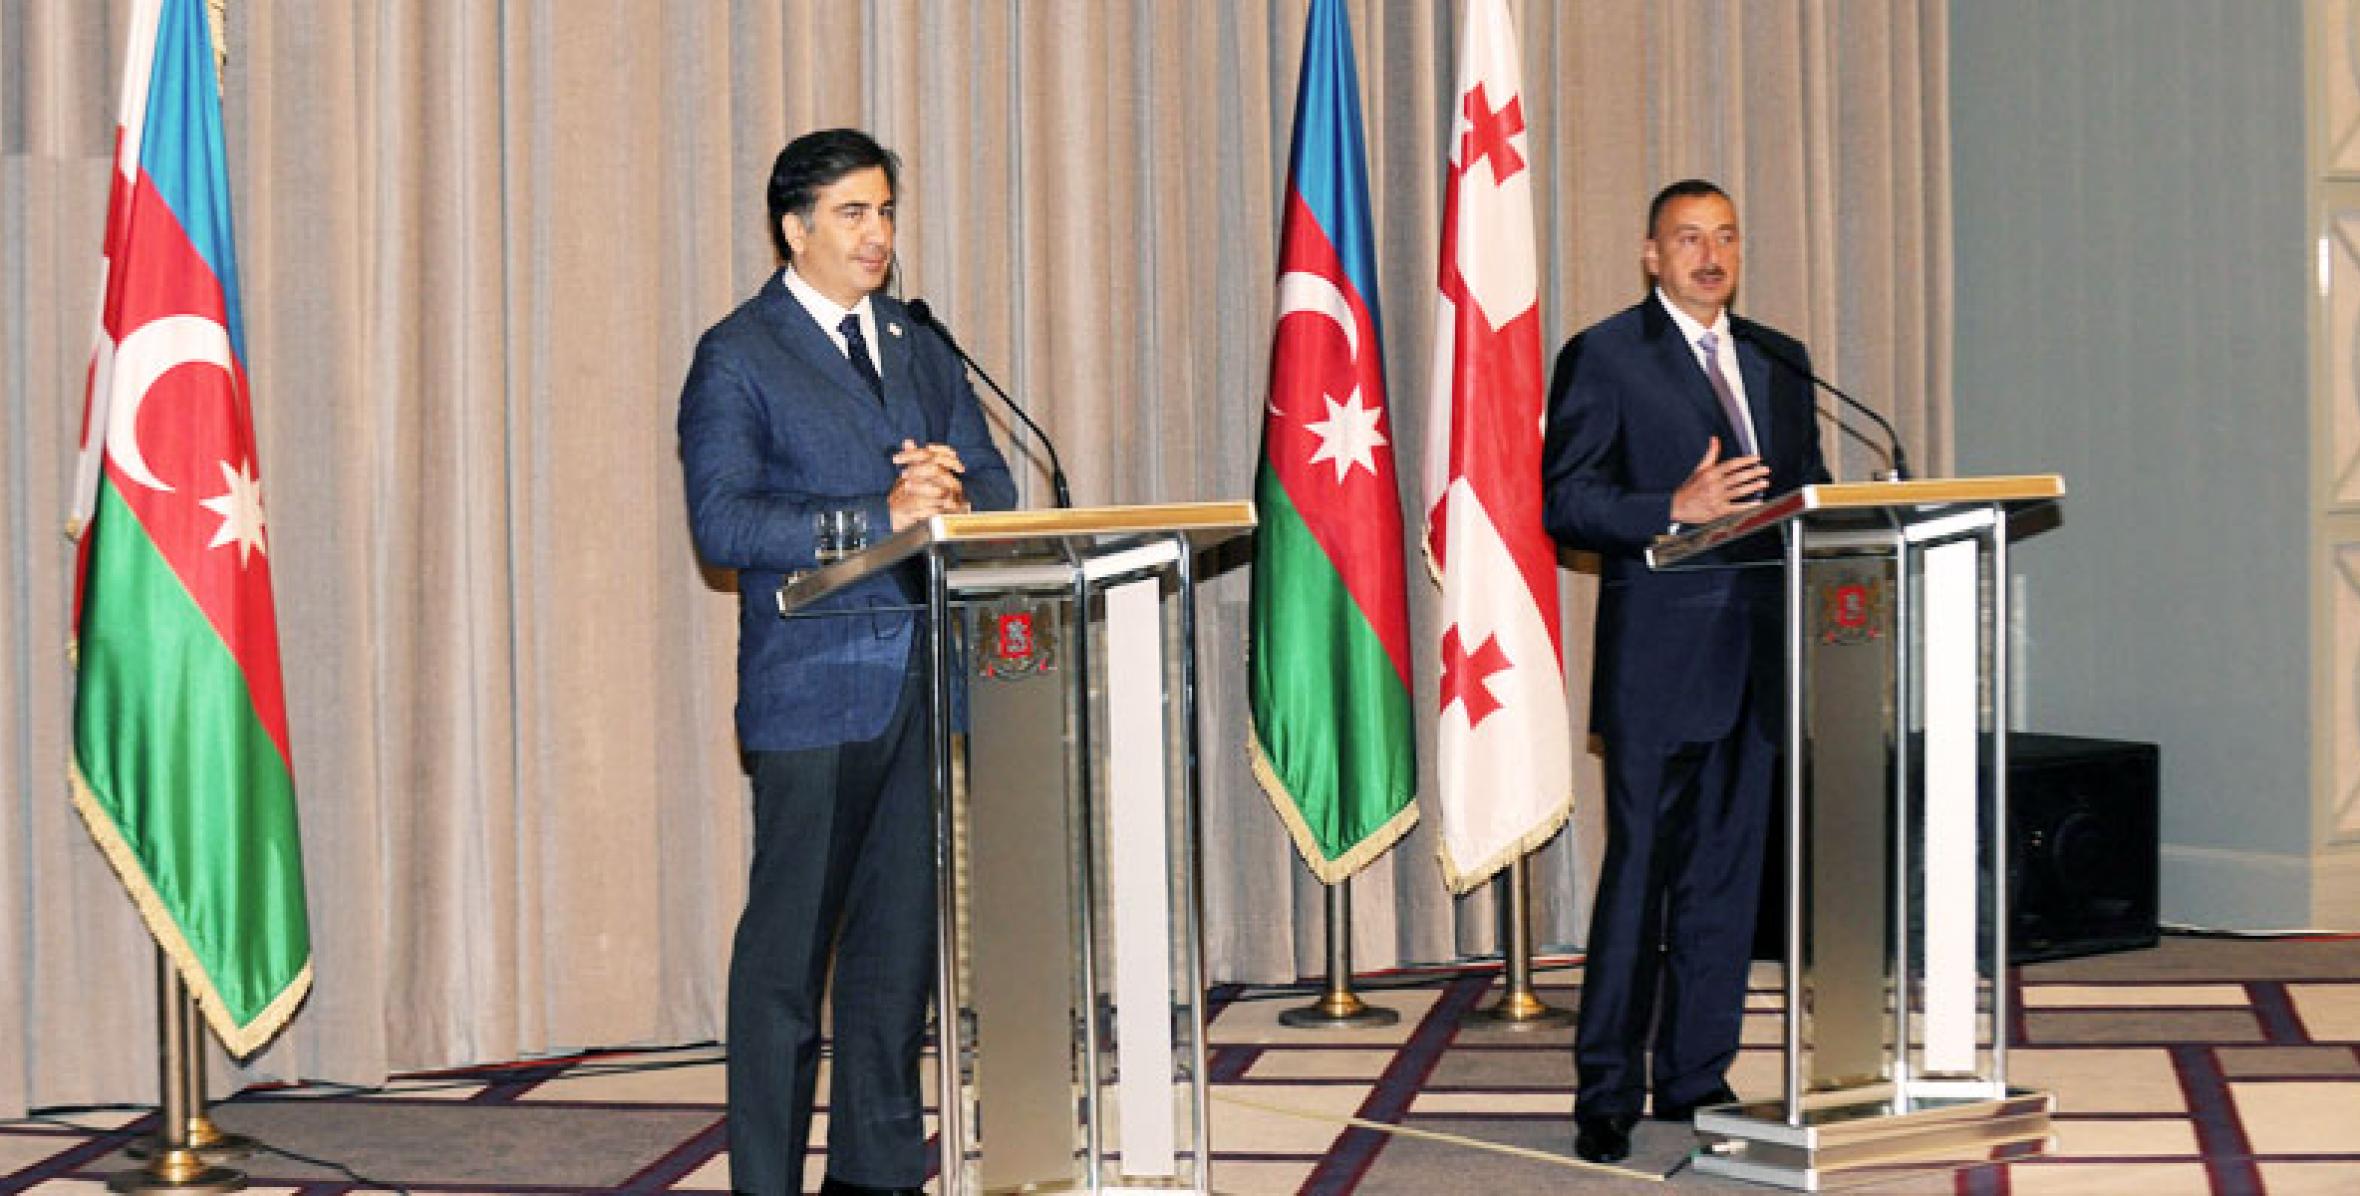 President Ilham Aliyev and President Mikheil Saakashvili held a joint press conference